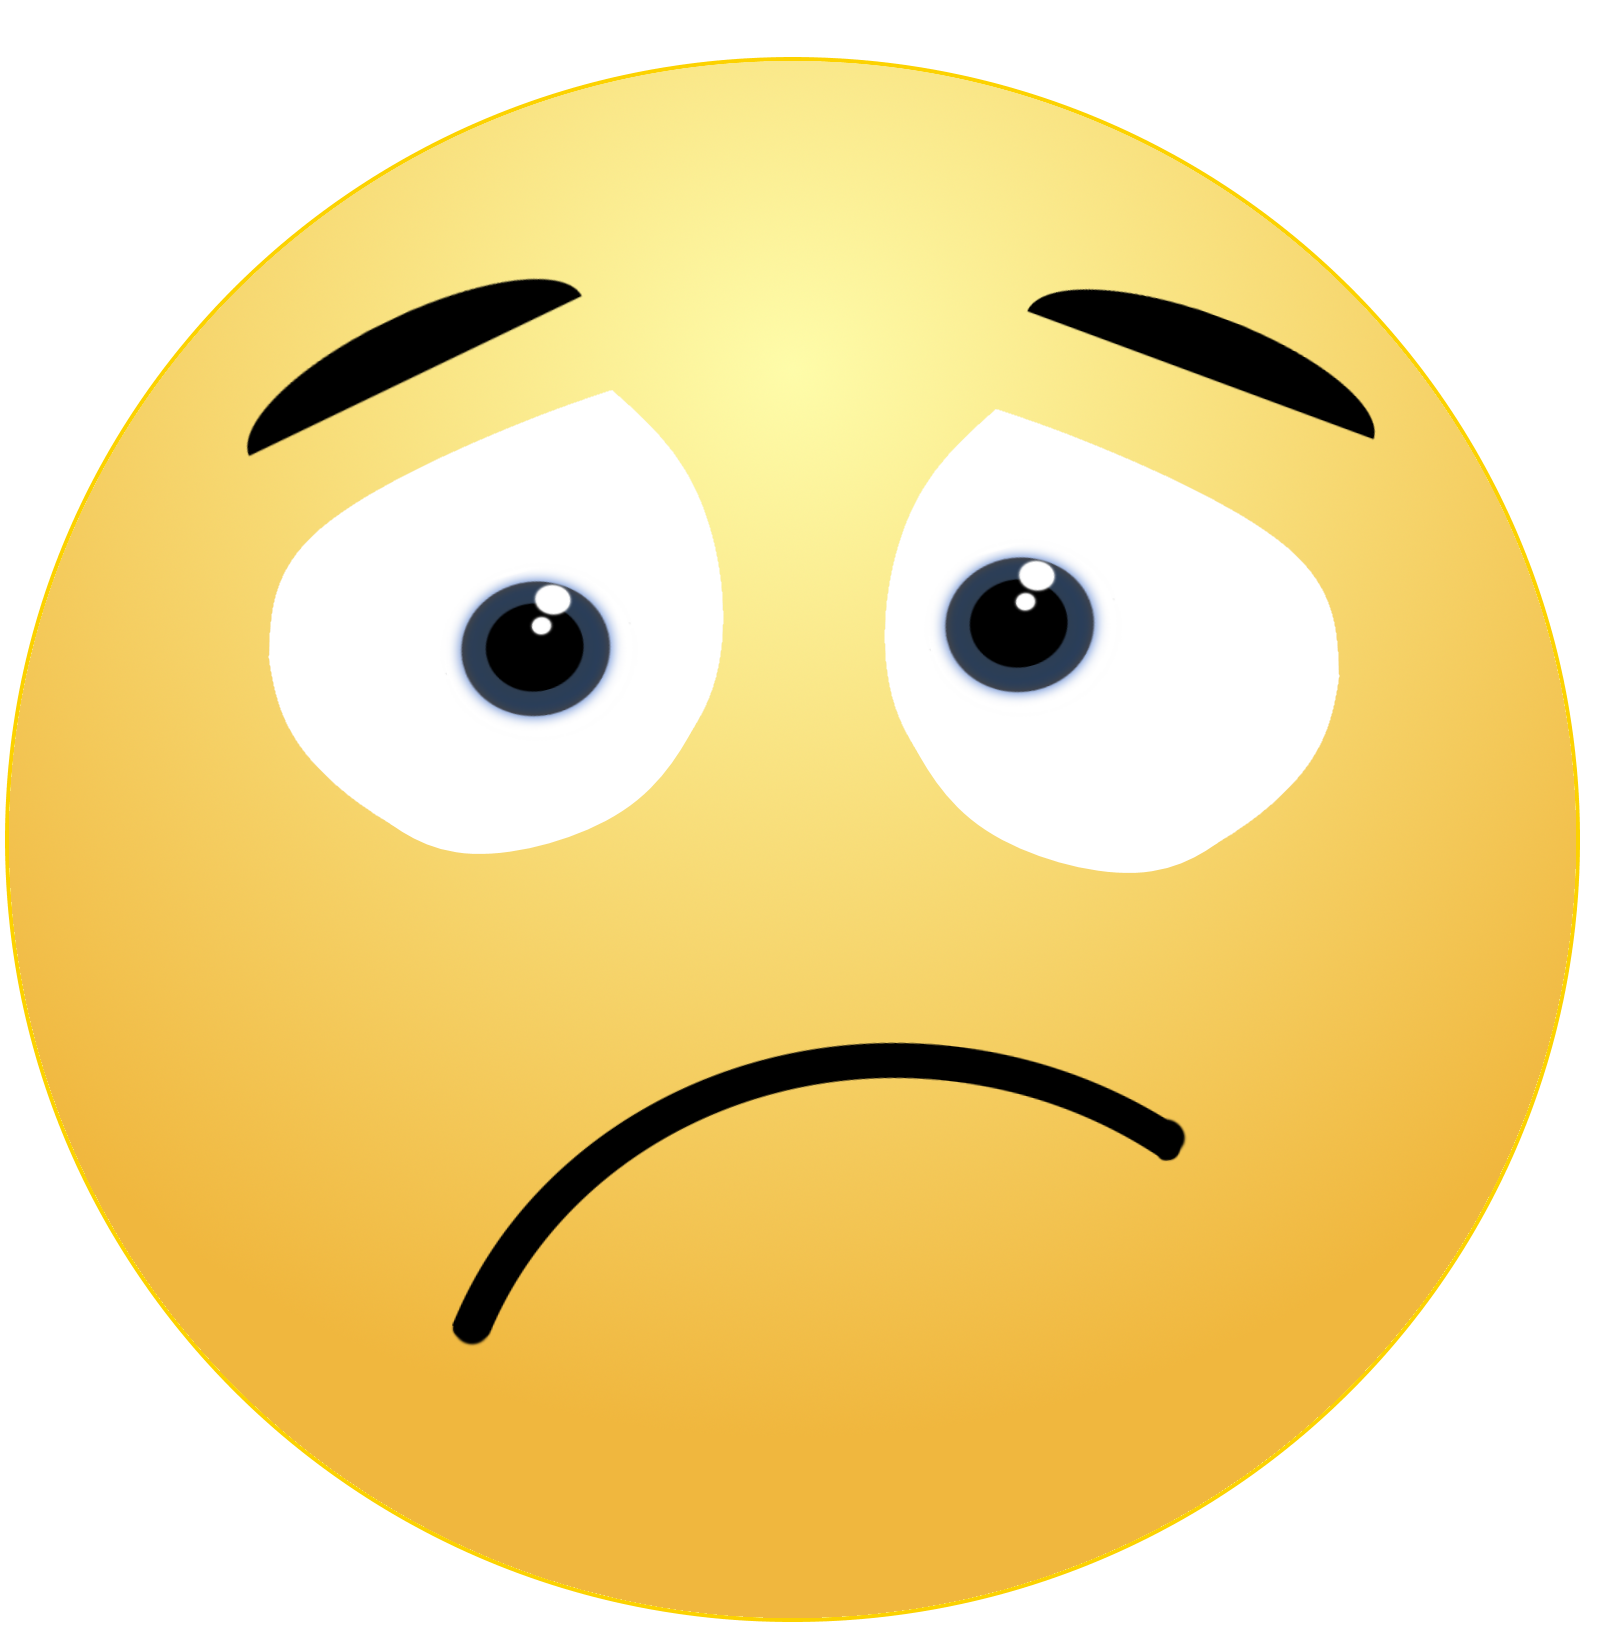 Download PNG image - Bewildered Emoji PNG Transparent Image 